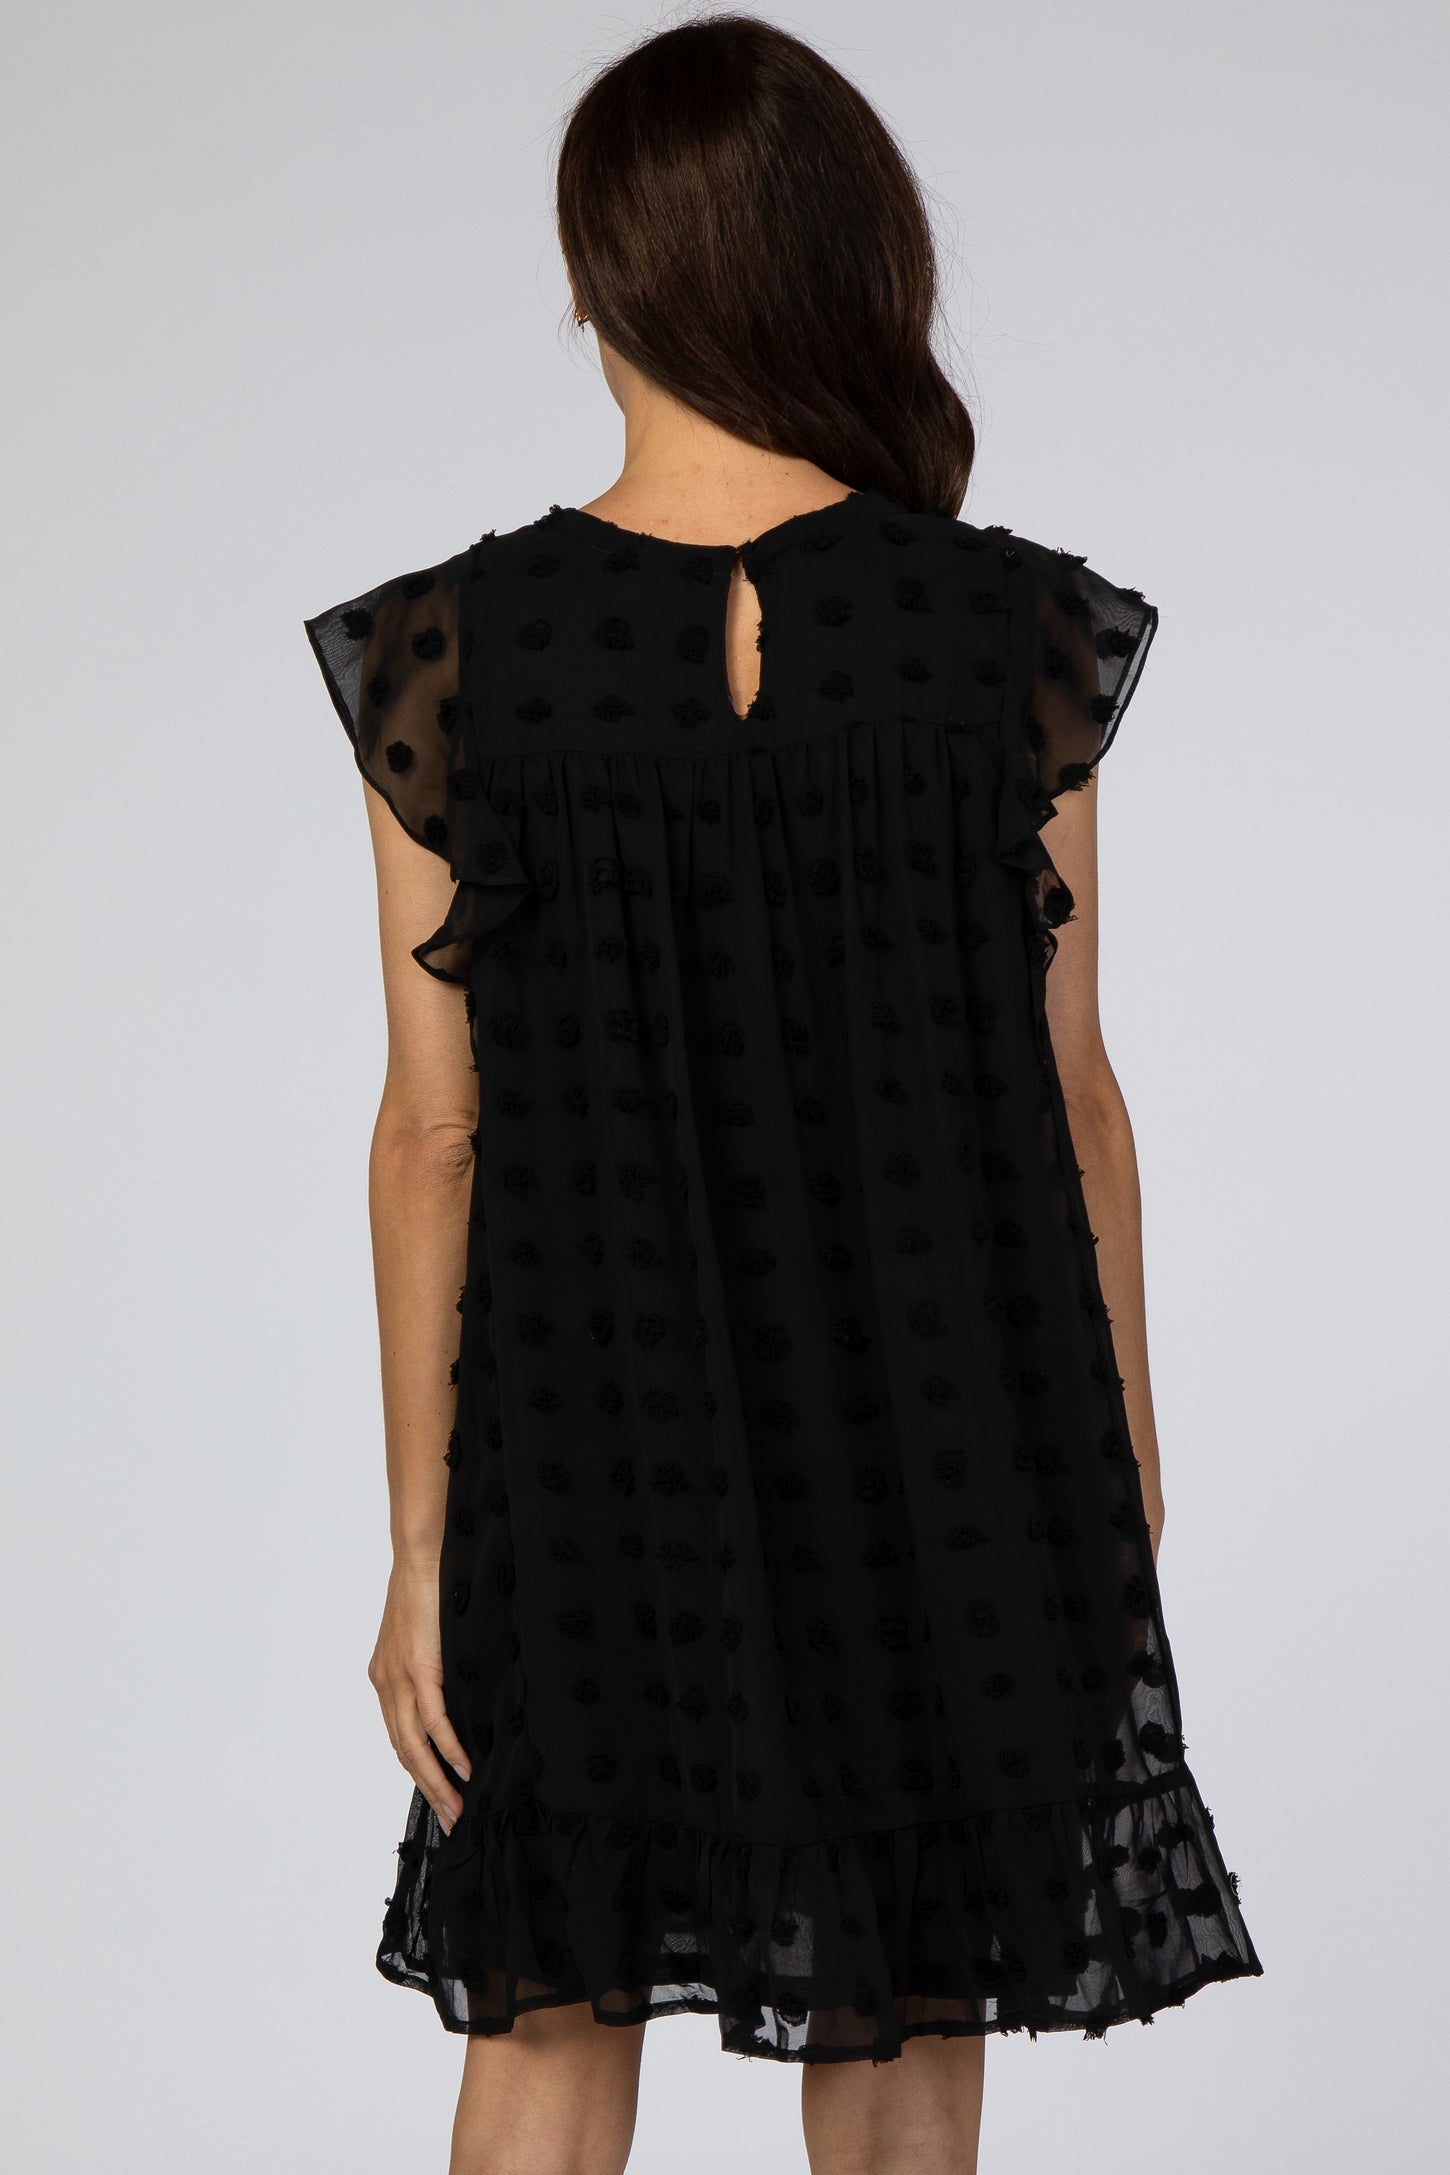 Black Textured Polka Dot Ruffle Dress